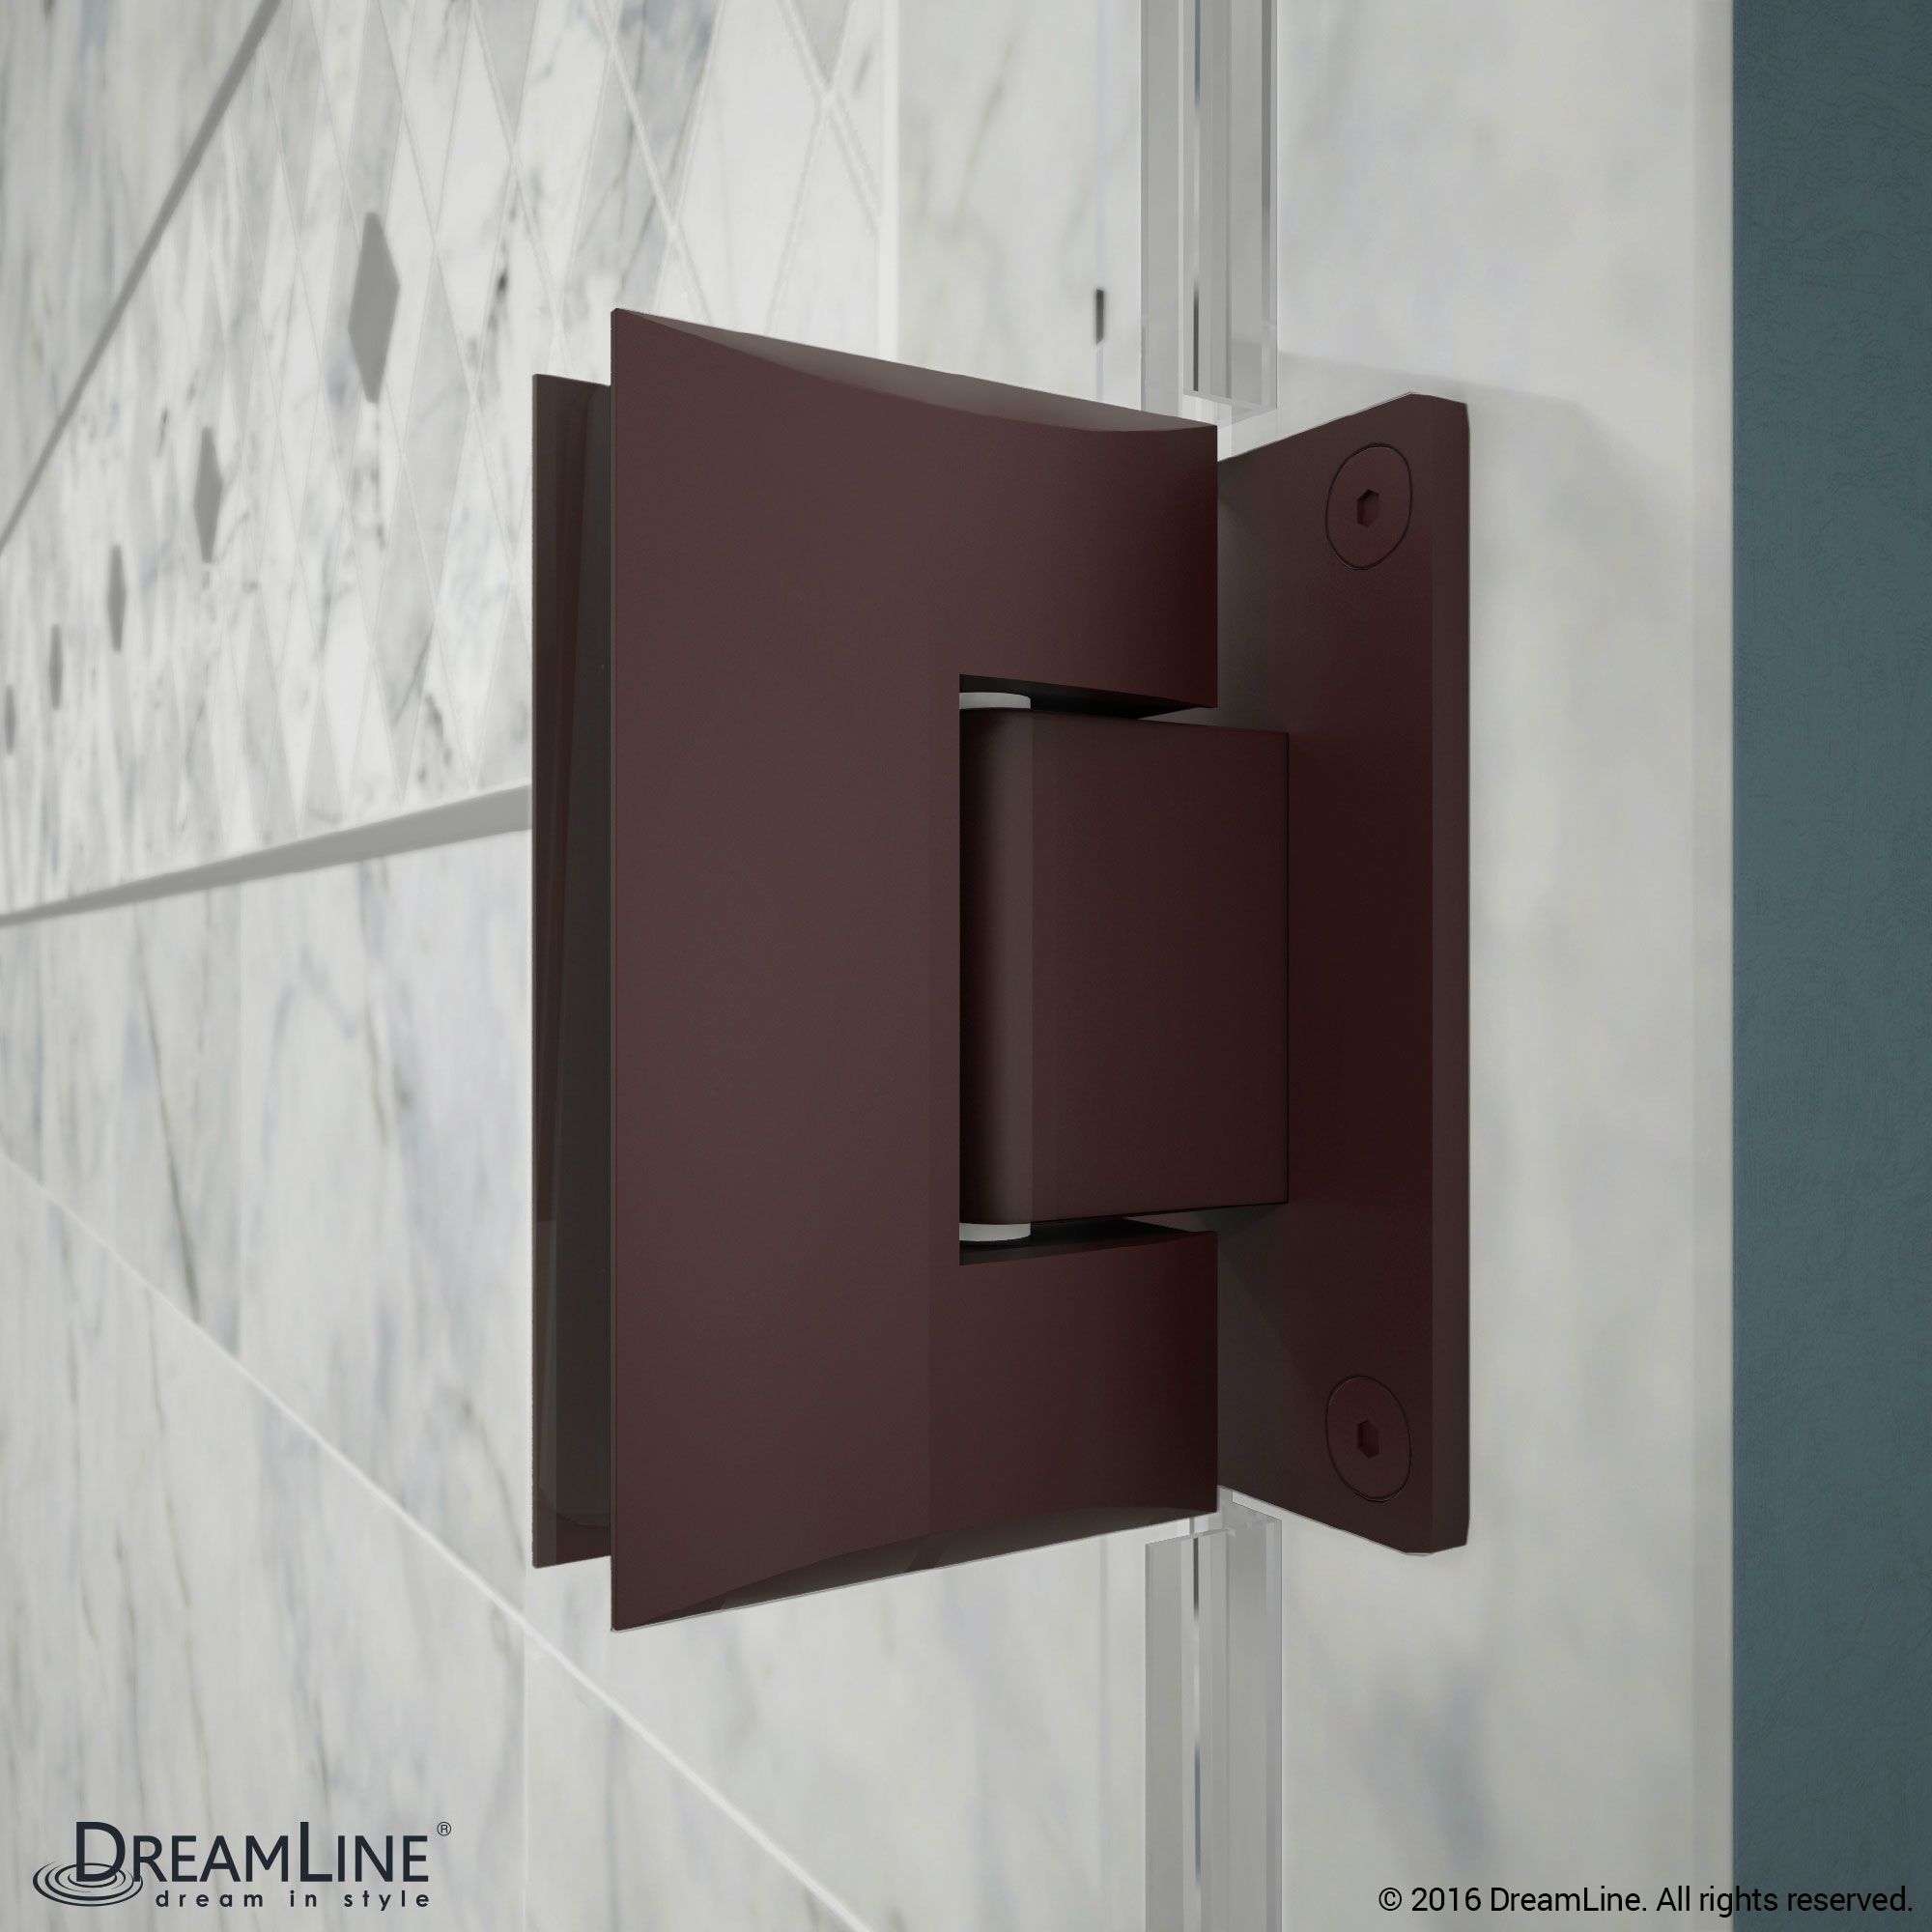 DreamLine SHEN-24470340-06 Unidoor Plus Hinged Shower Enclosure In Oil Rubbed Bronze Finish Hardware